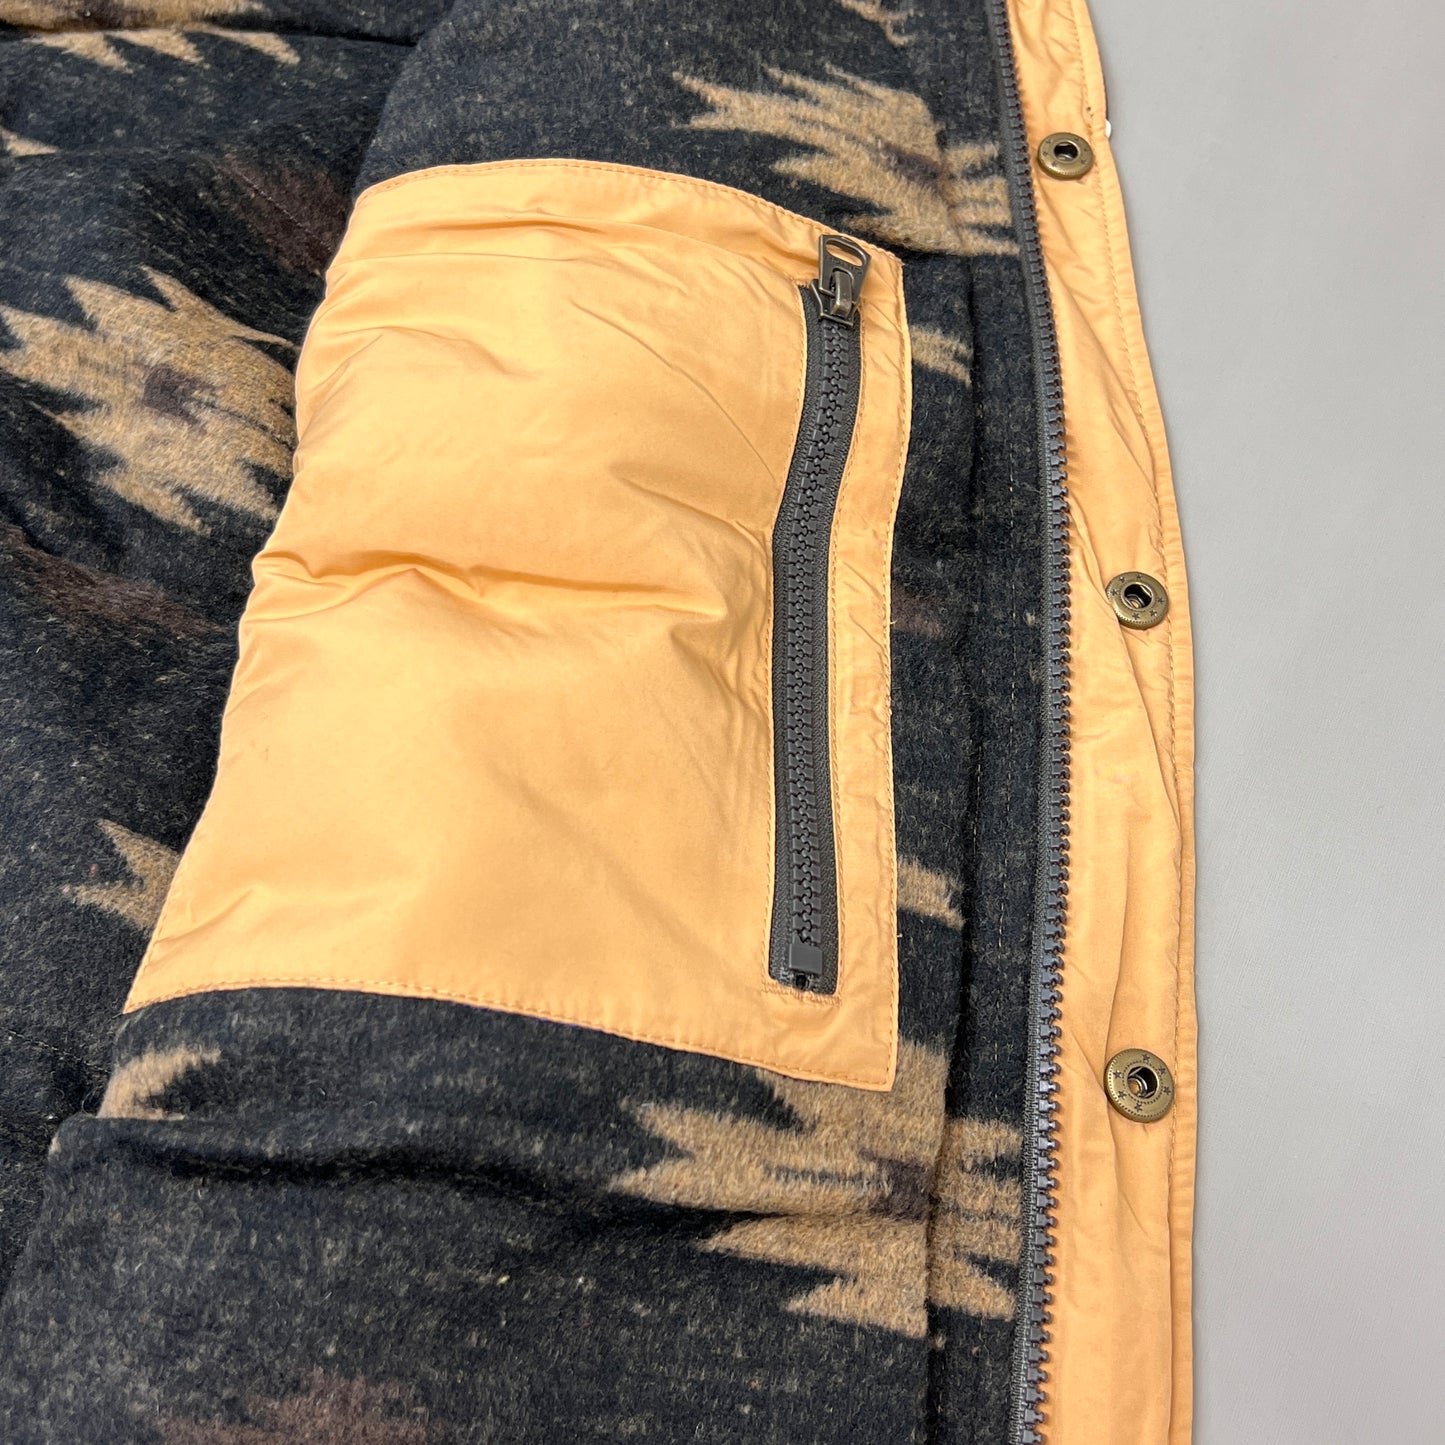 CINCH Quilted Vest Men's Sz S Gold/Brown MWV1578001 (New)